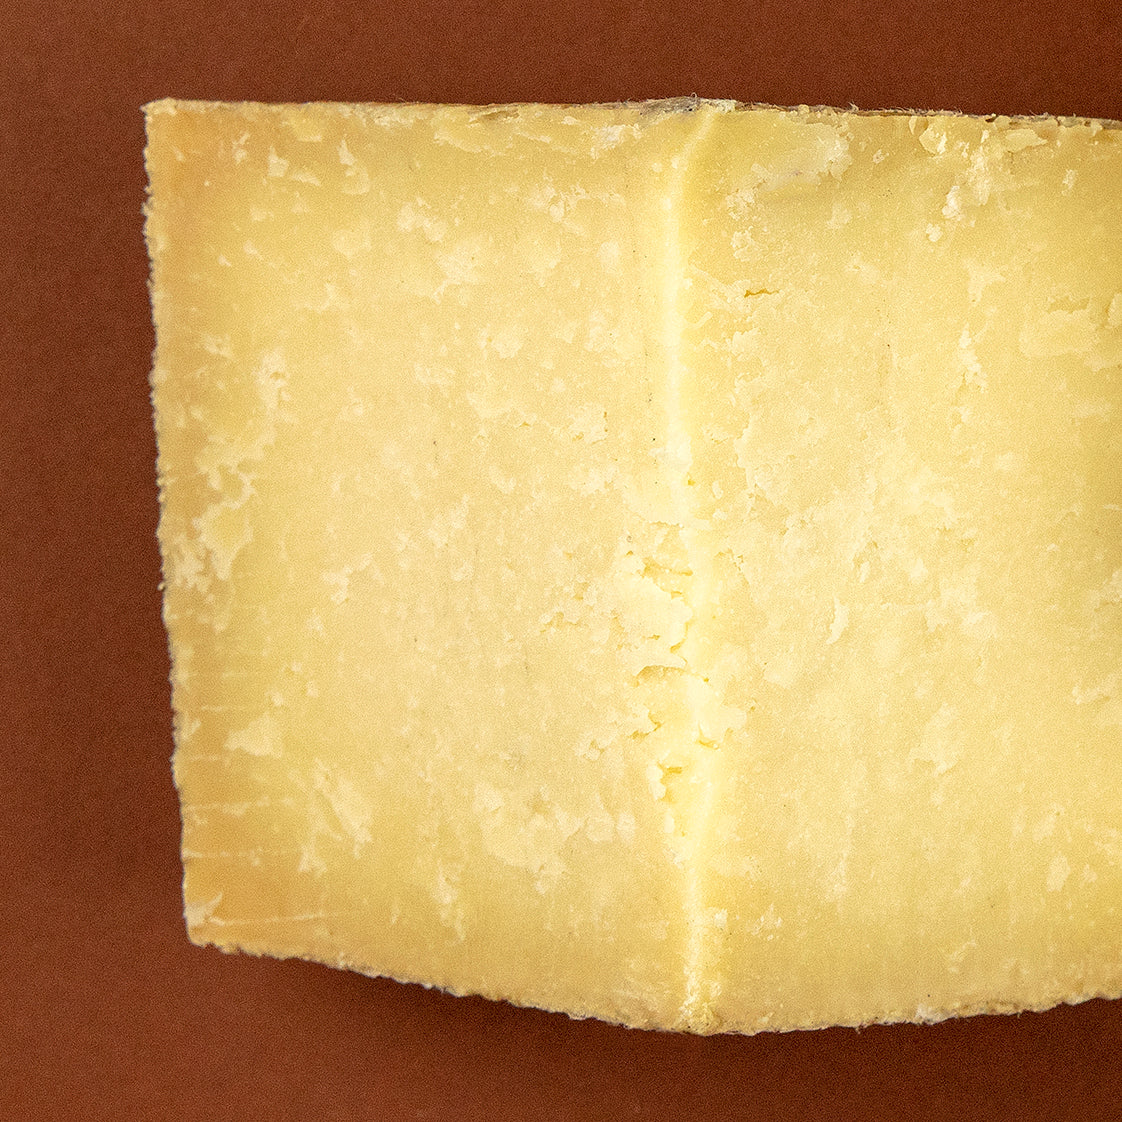 Zamorano Cheese